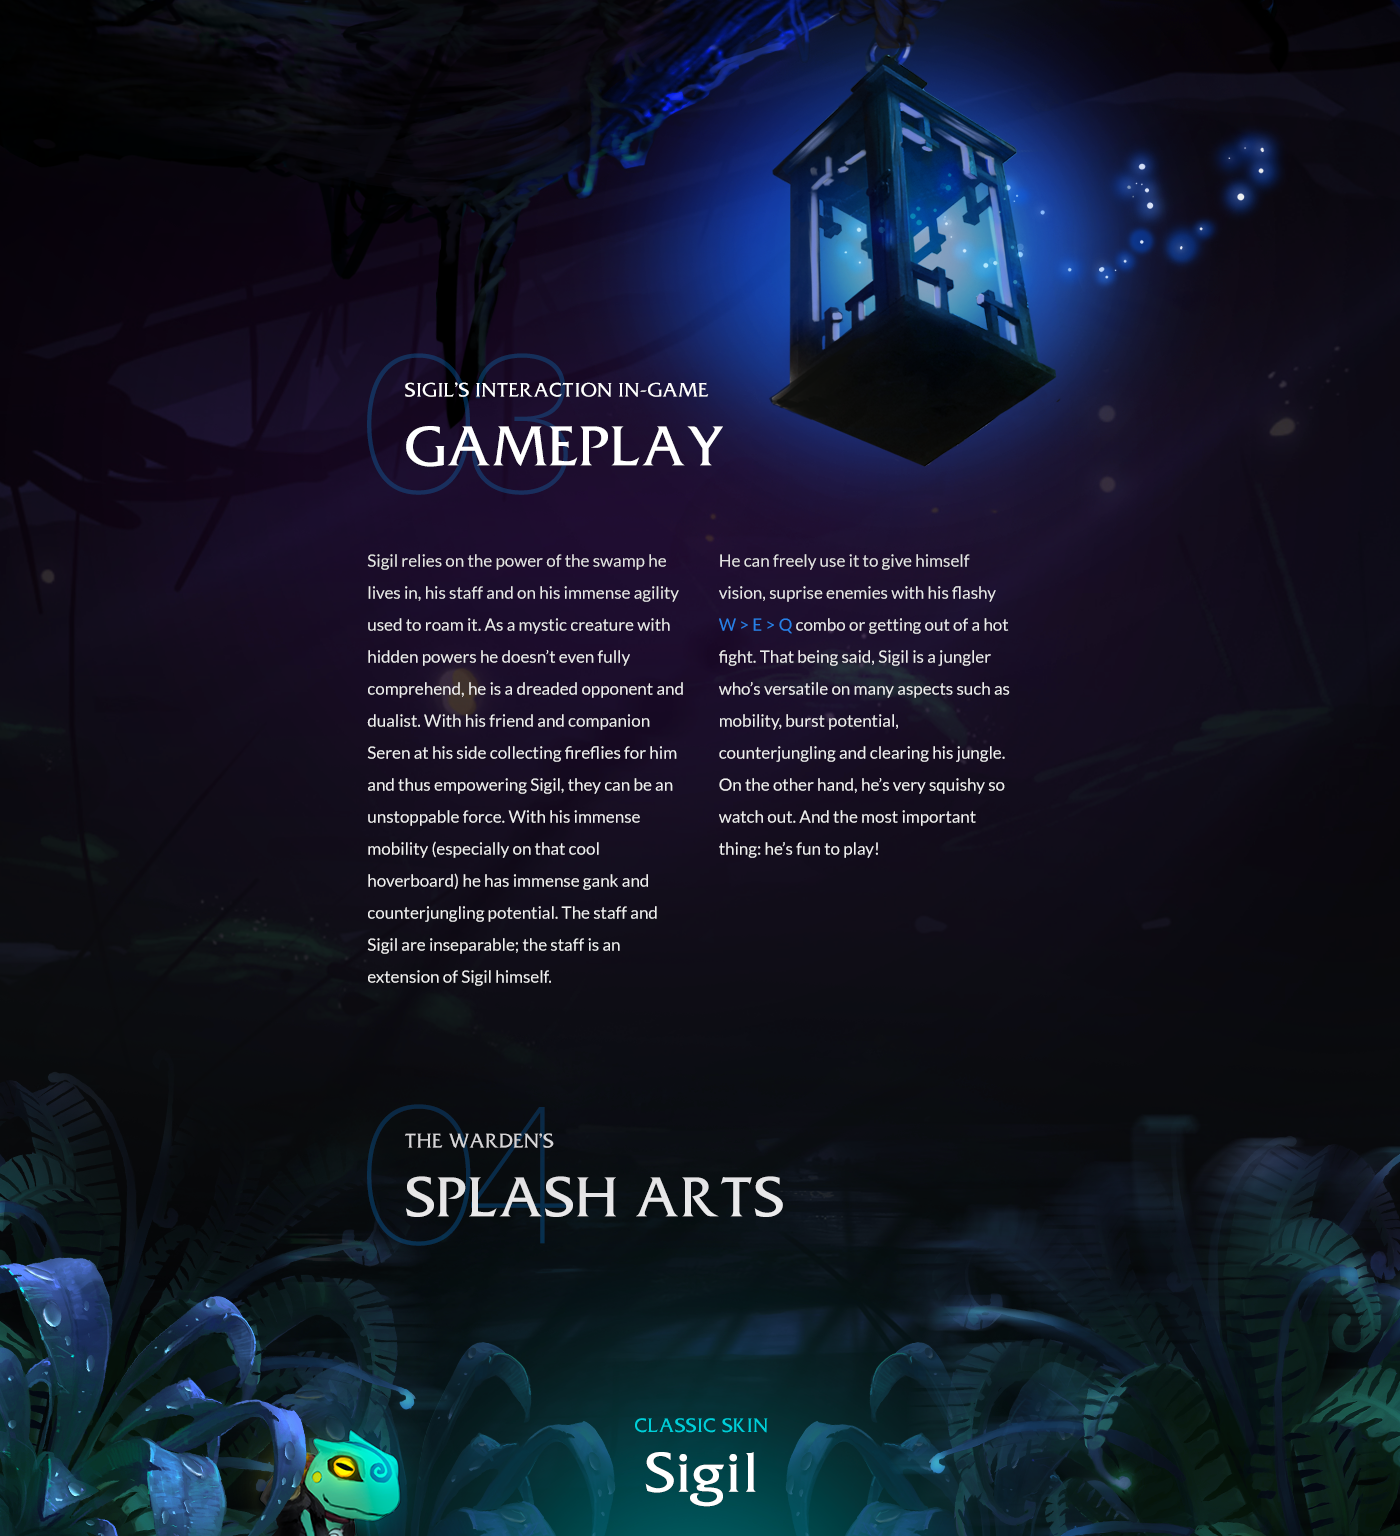 sigil champion league of legends Character concept fireflies frog lizzard interactive 3D environment teaser video DOTA RIOT GAMES